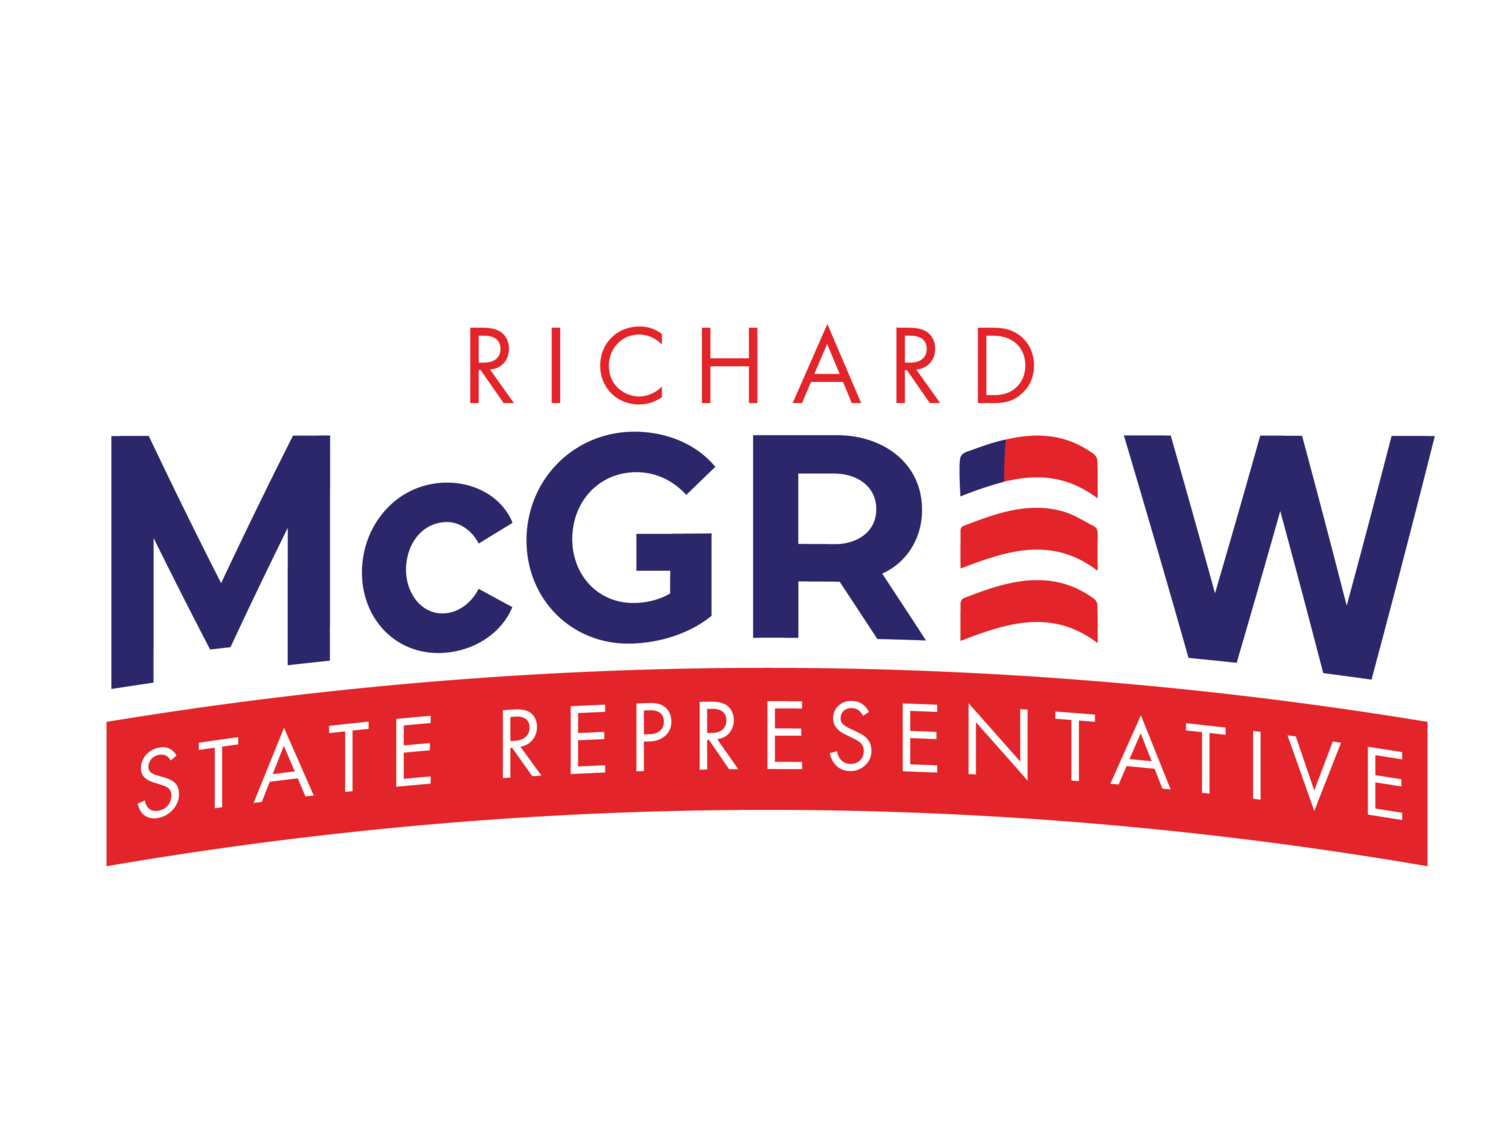 Richard McGrew for State Representative